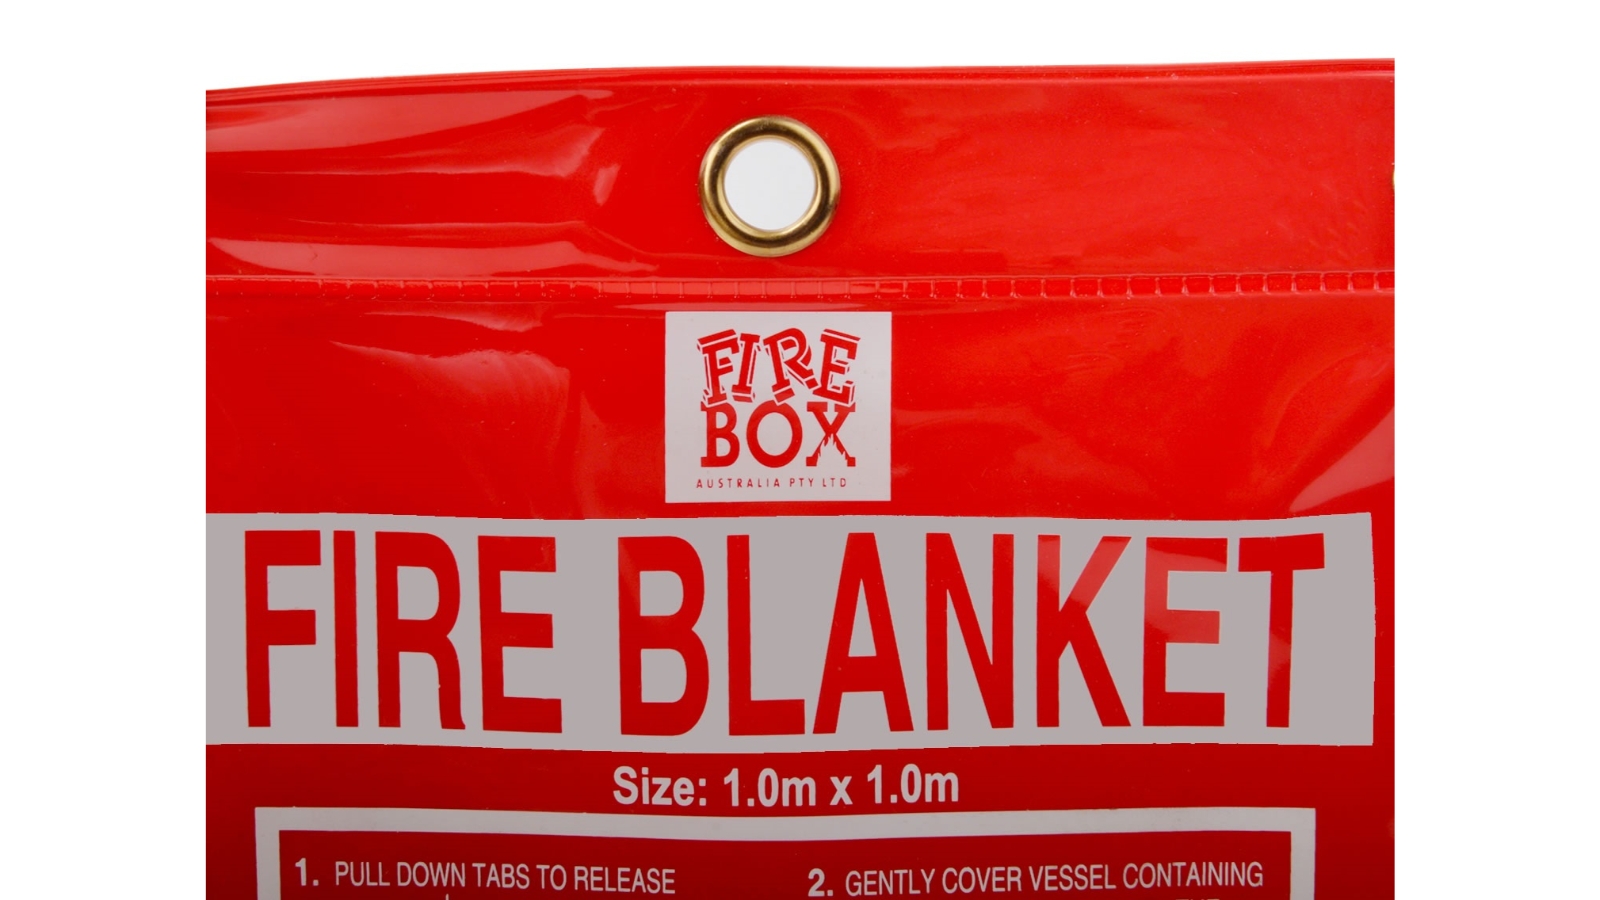 Firebox 1.0m x 1.0m Fire Blanket